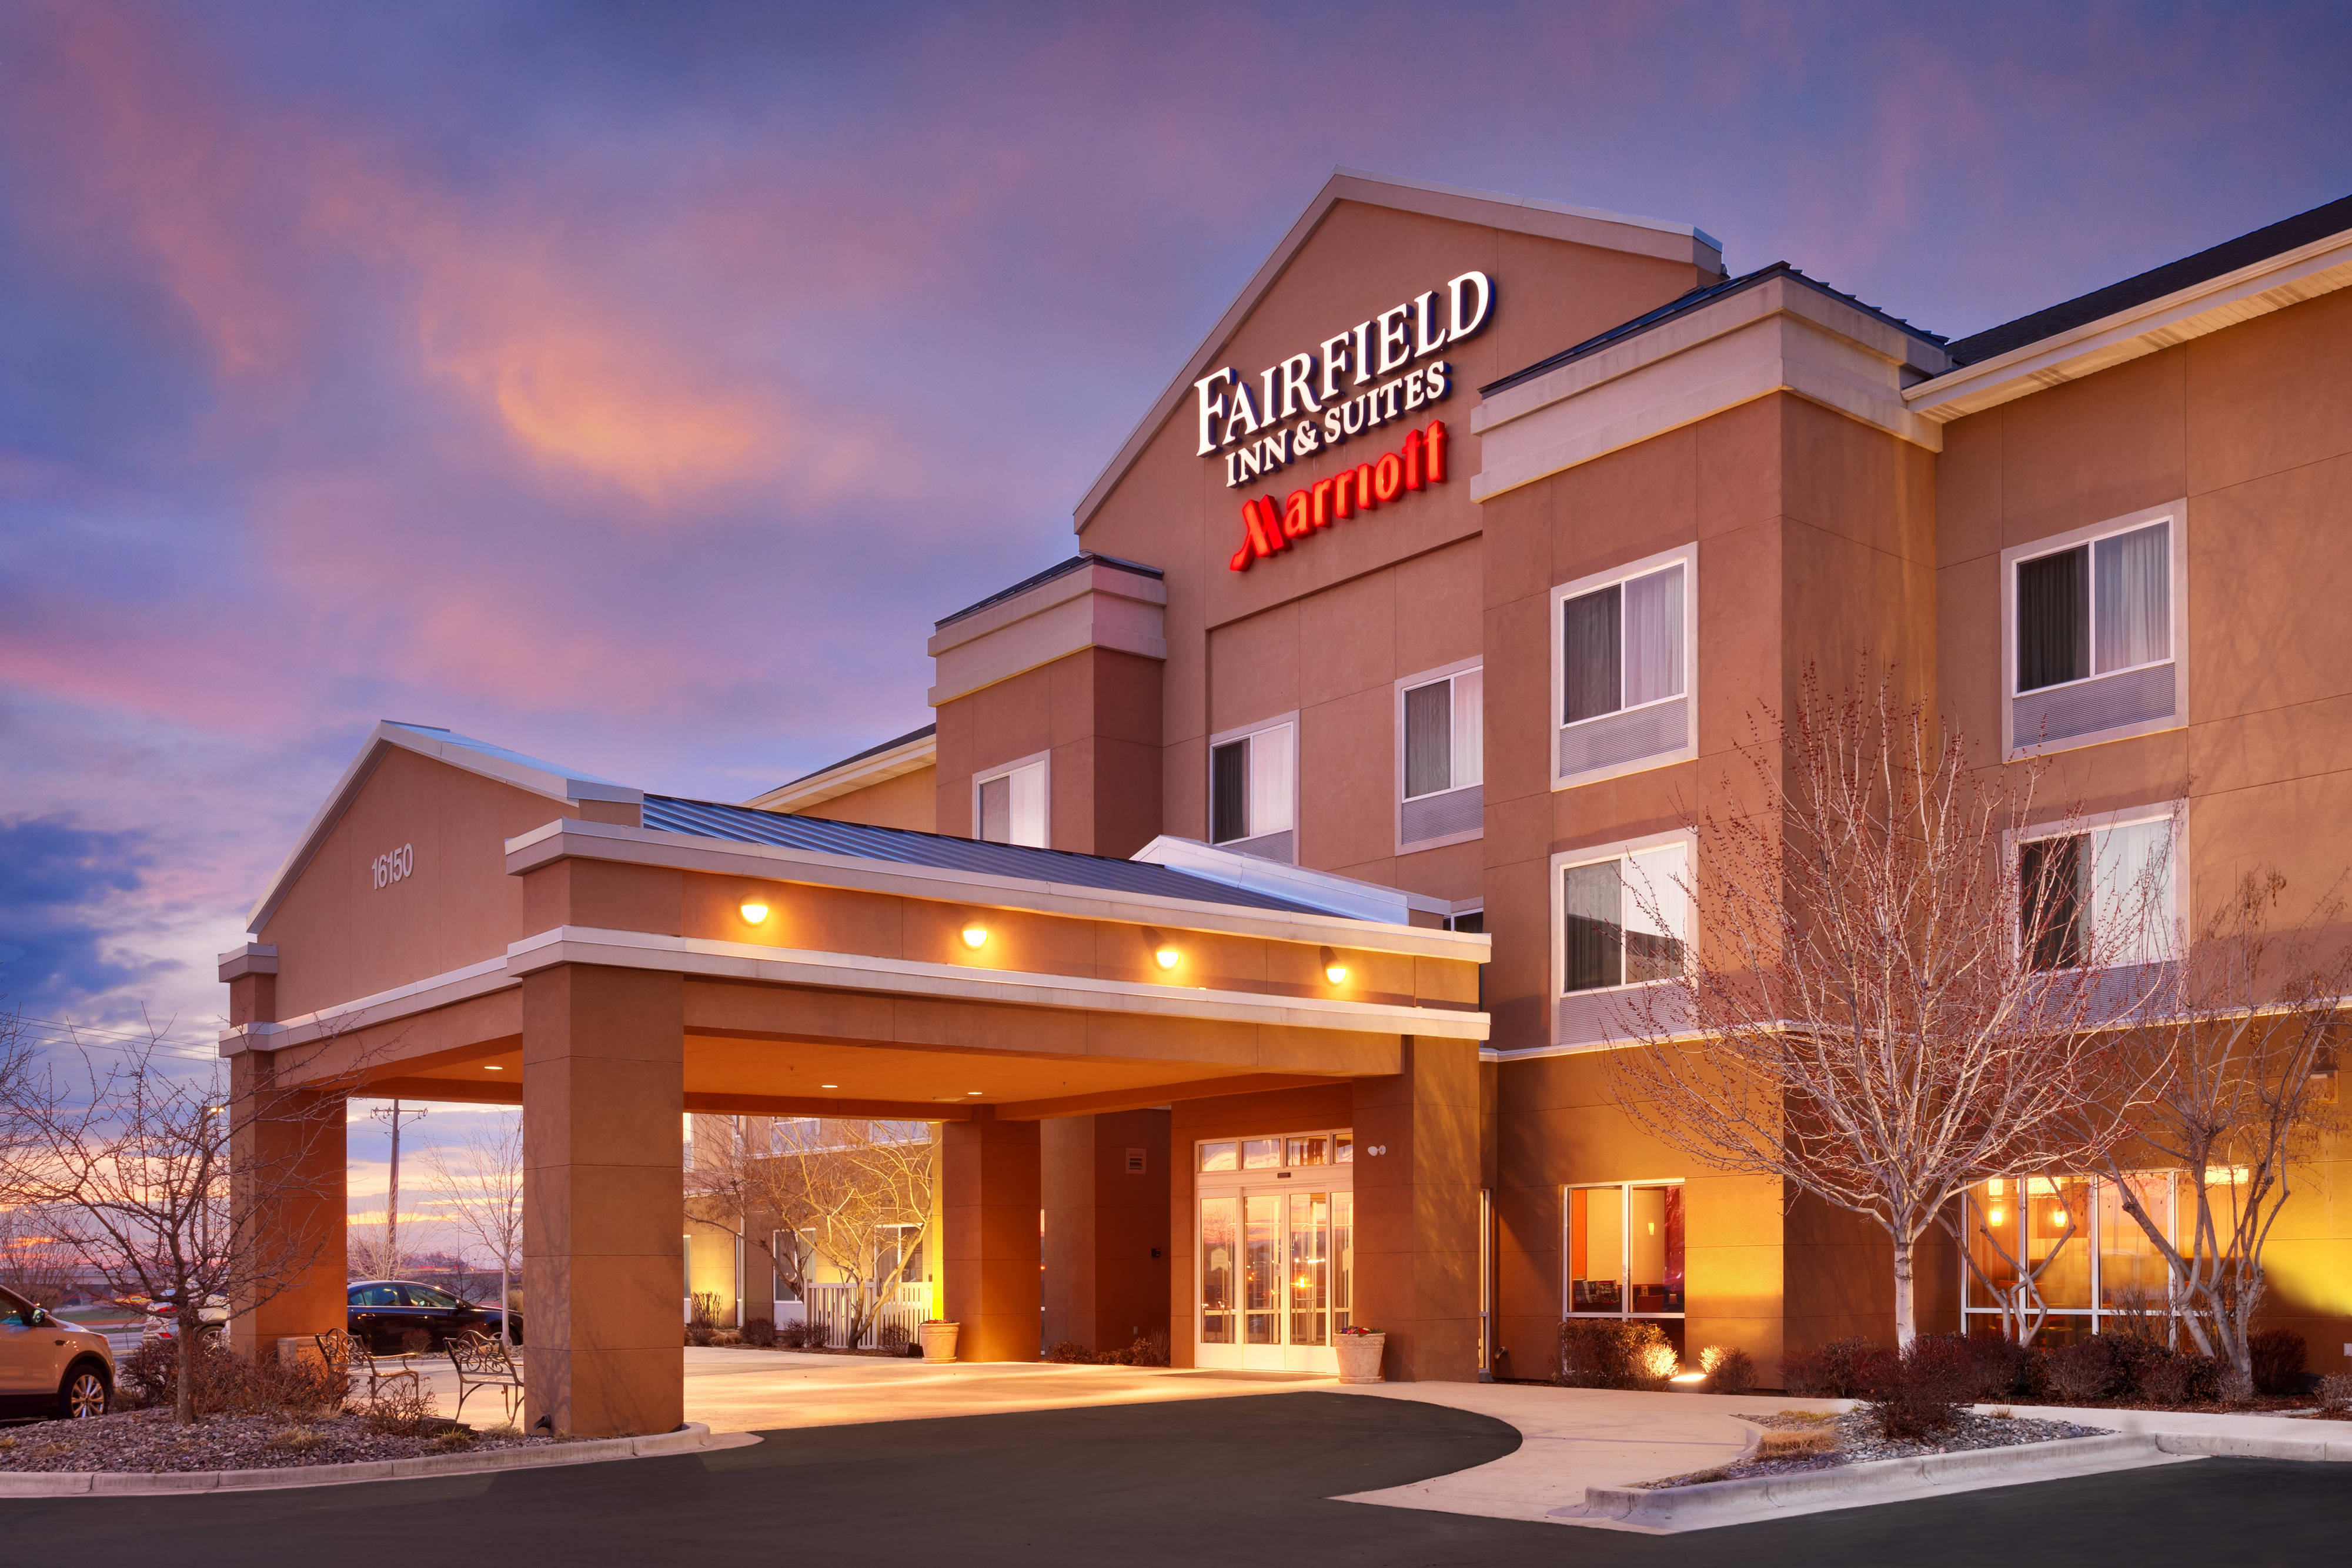 Photo of Fairfield Inn & Suites Boise Nampa, Nampa, ID